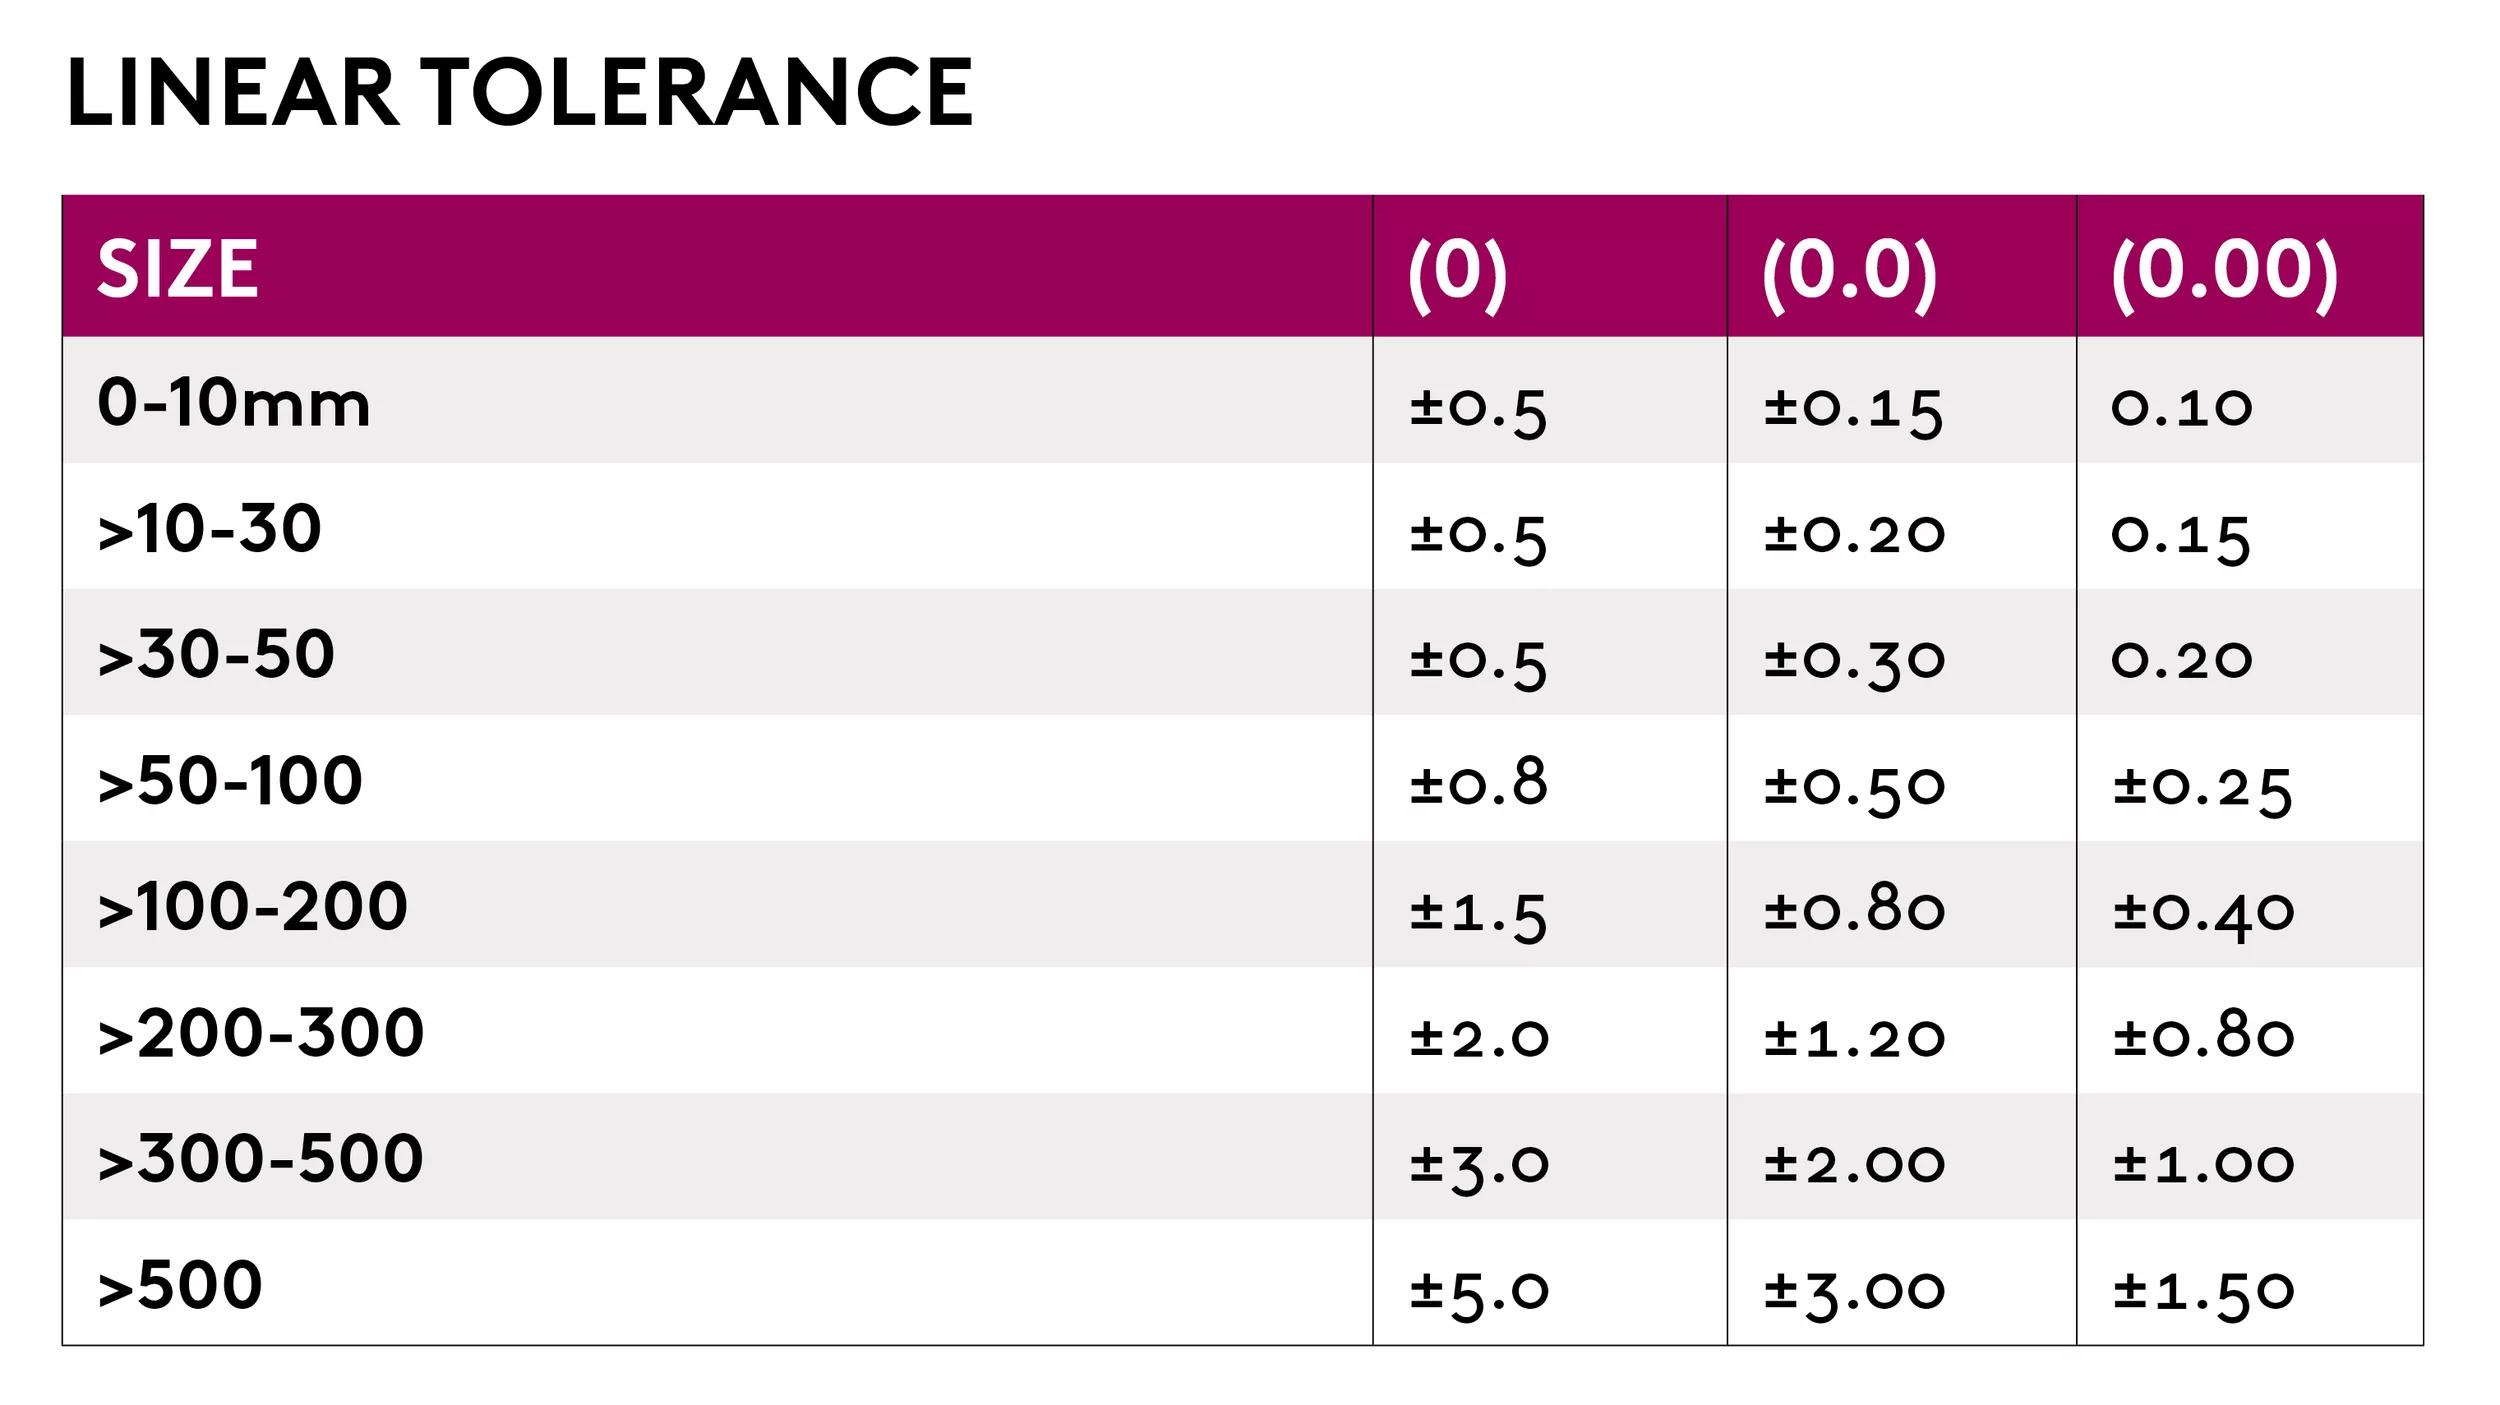 Linear tolerance table